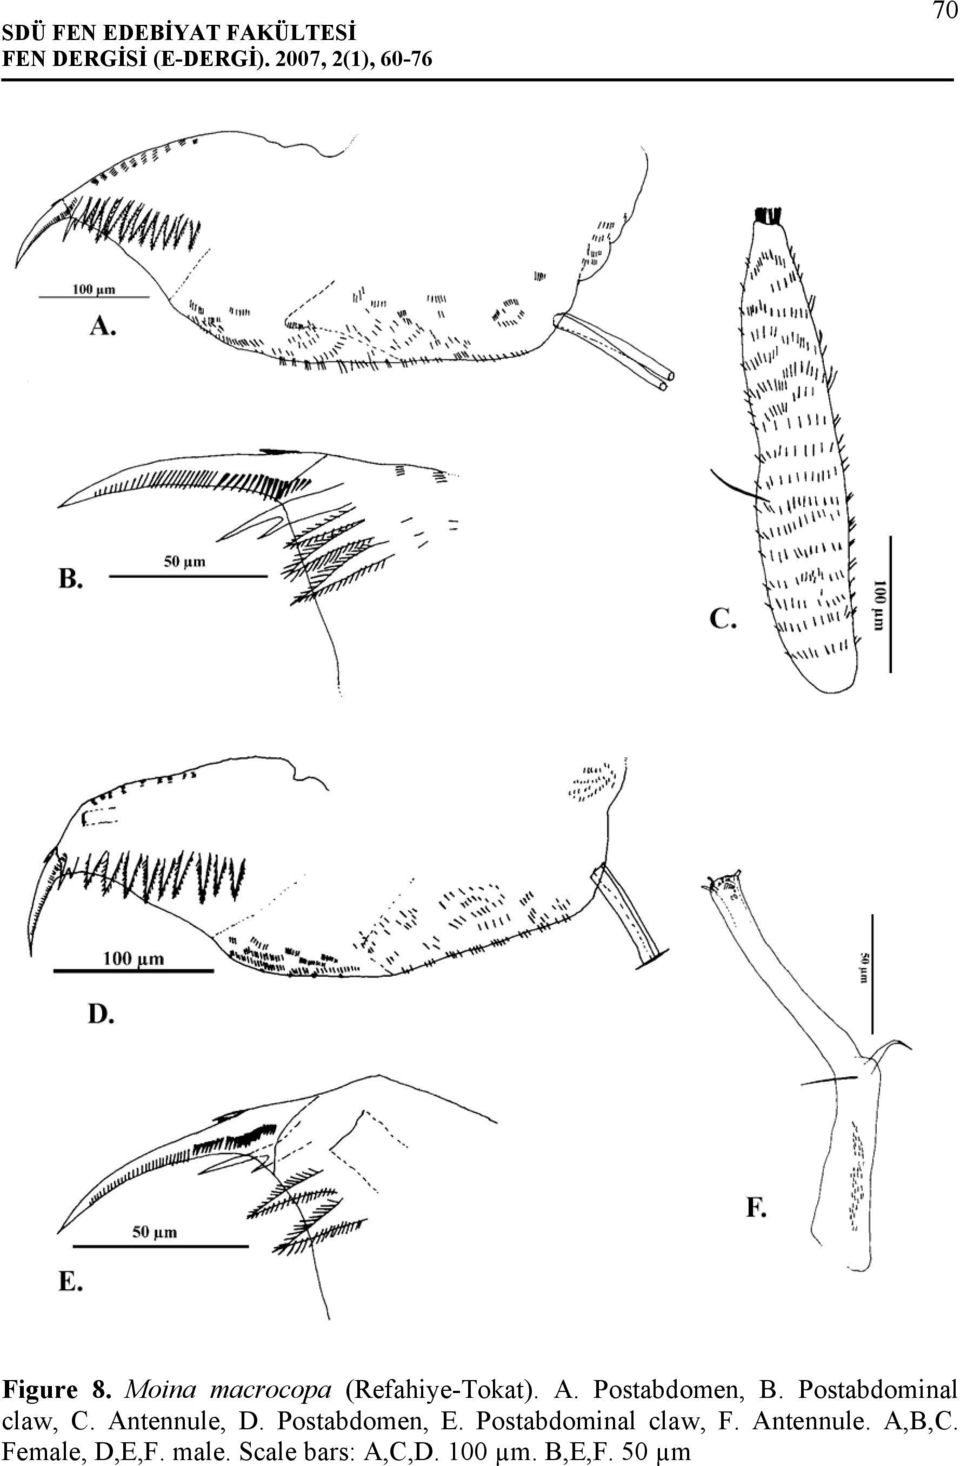 Postabdomen, E. Postabdominal claw, F. Antennule.